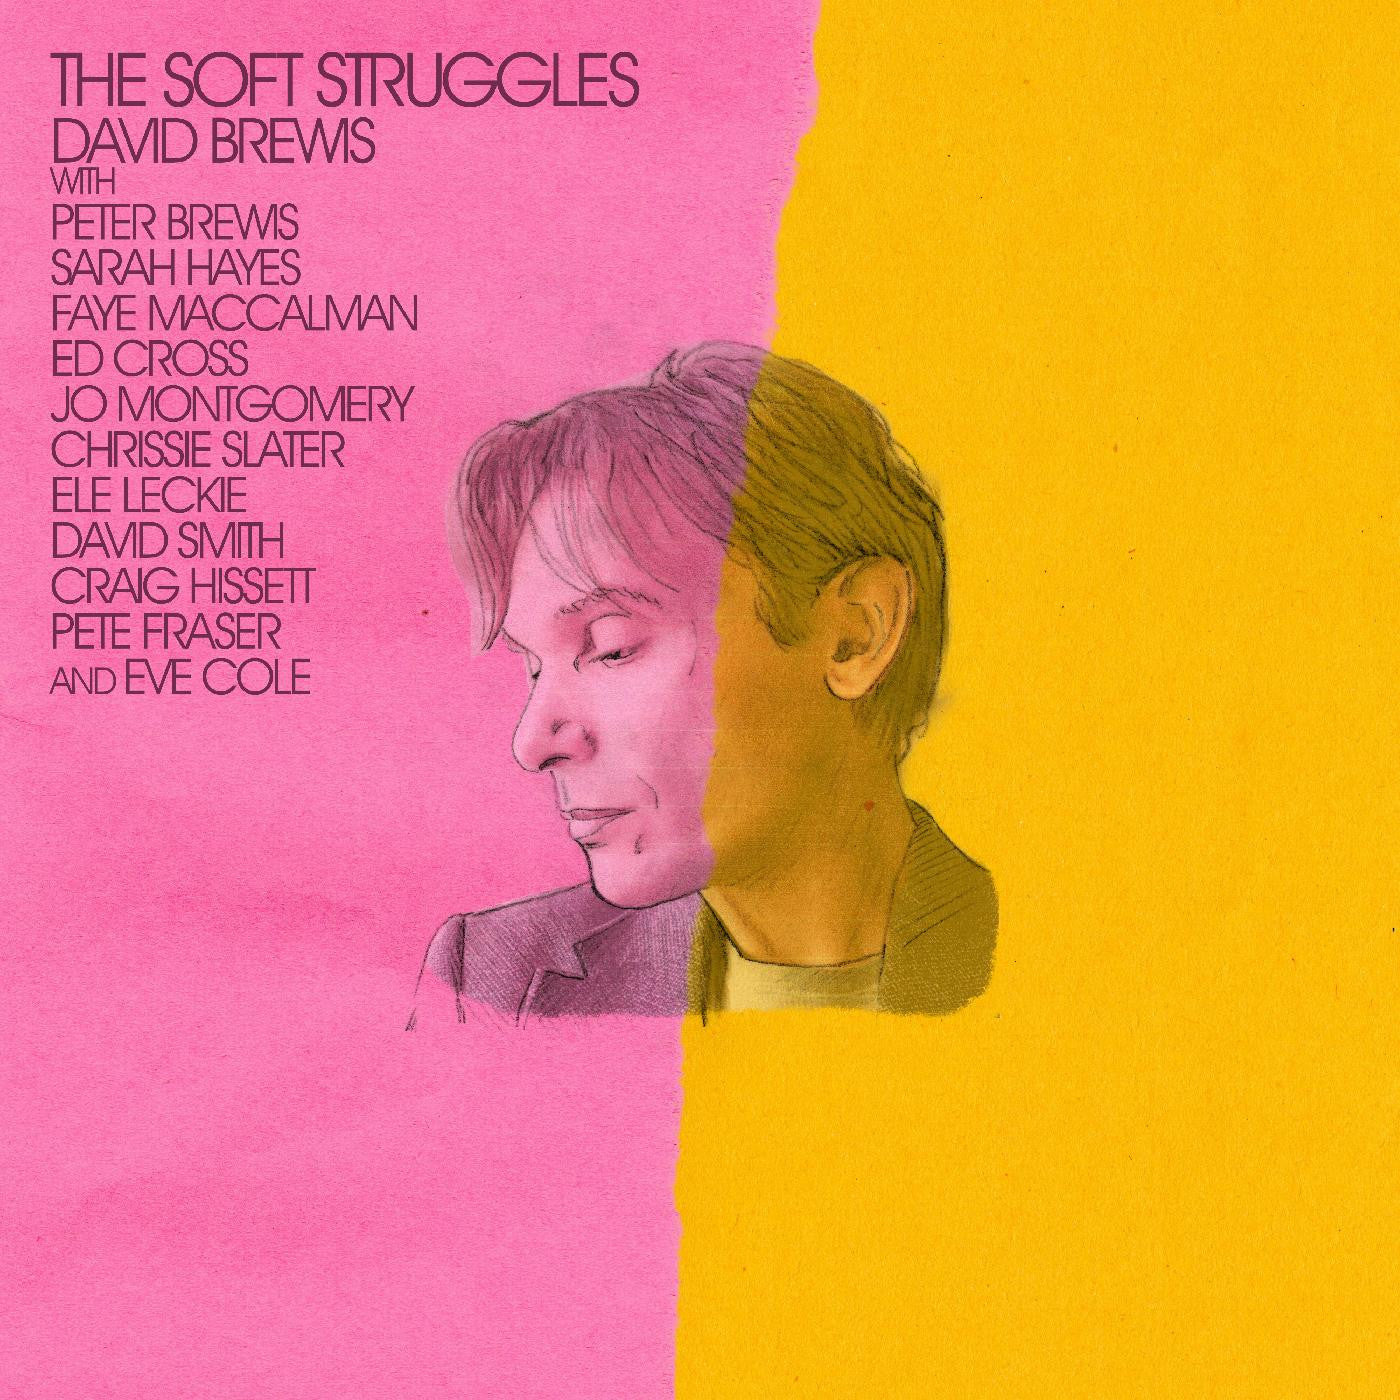 DAMAGED: David Brewis "The Soft Struggles" LP